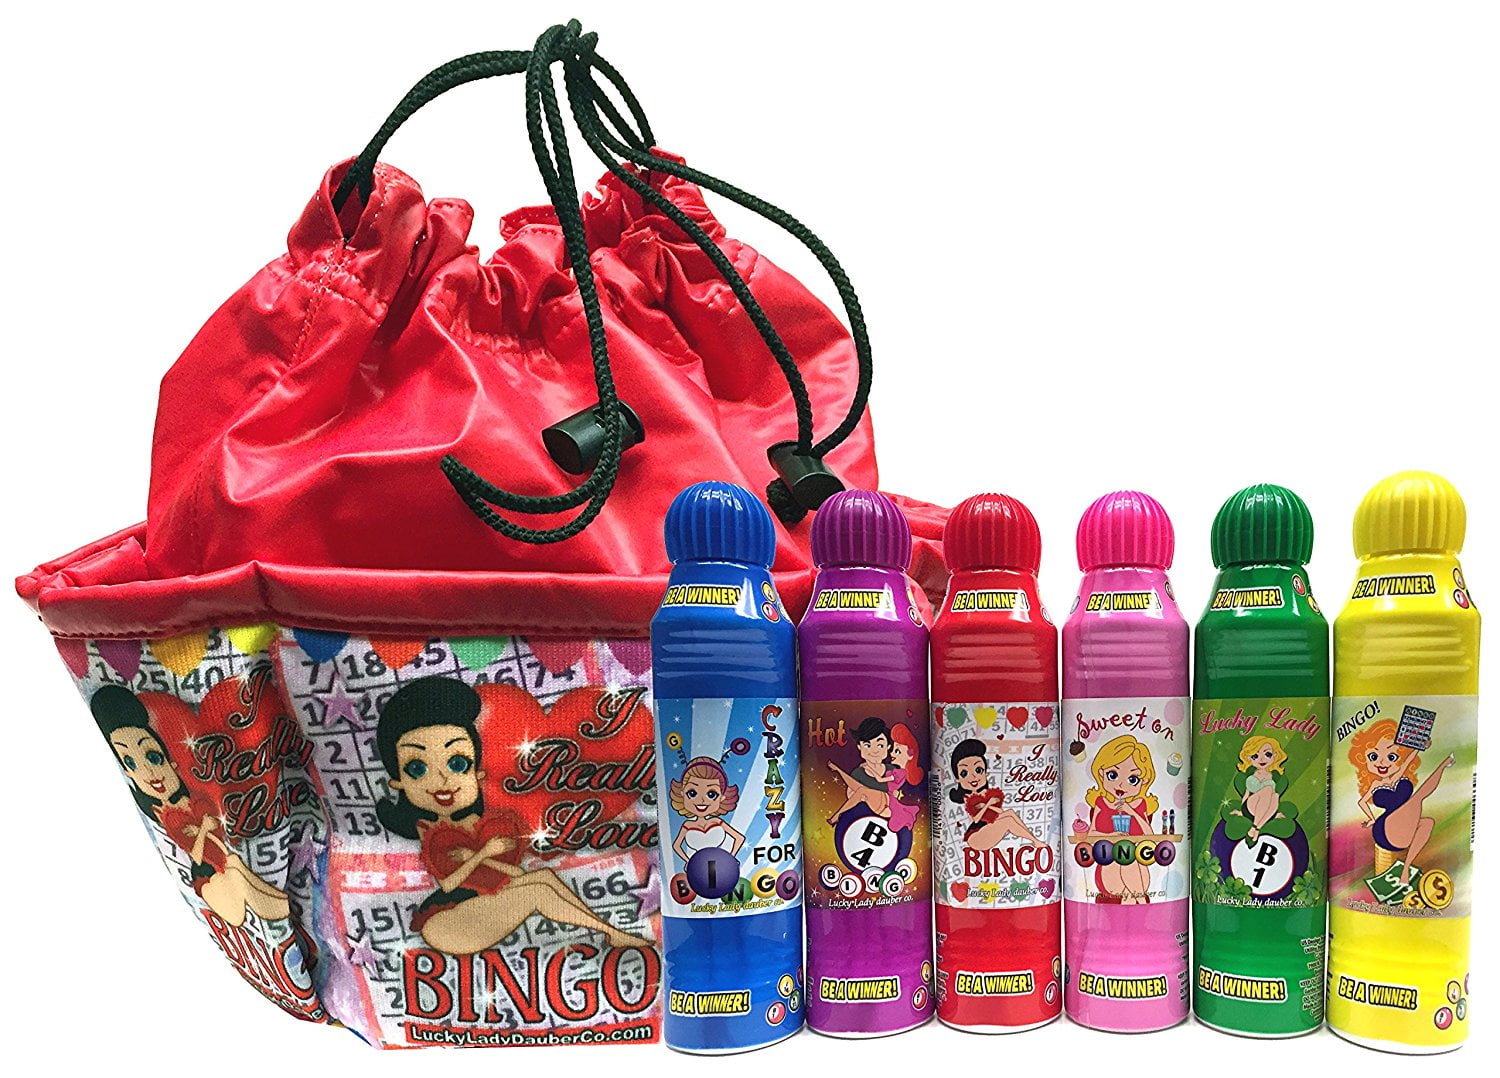 Details more than 75 custom bingo bags super hot - in.cdgdbentre